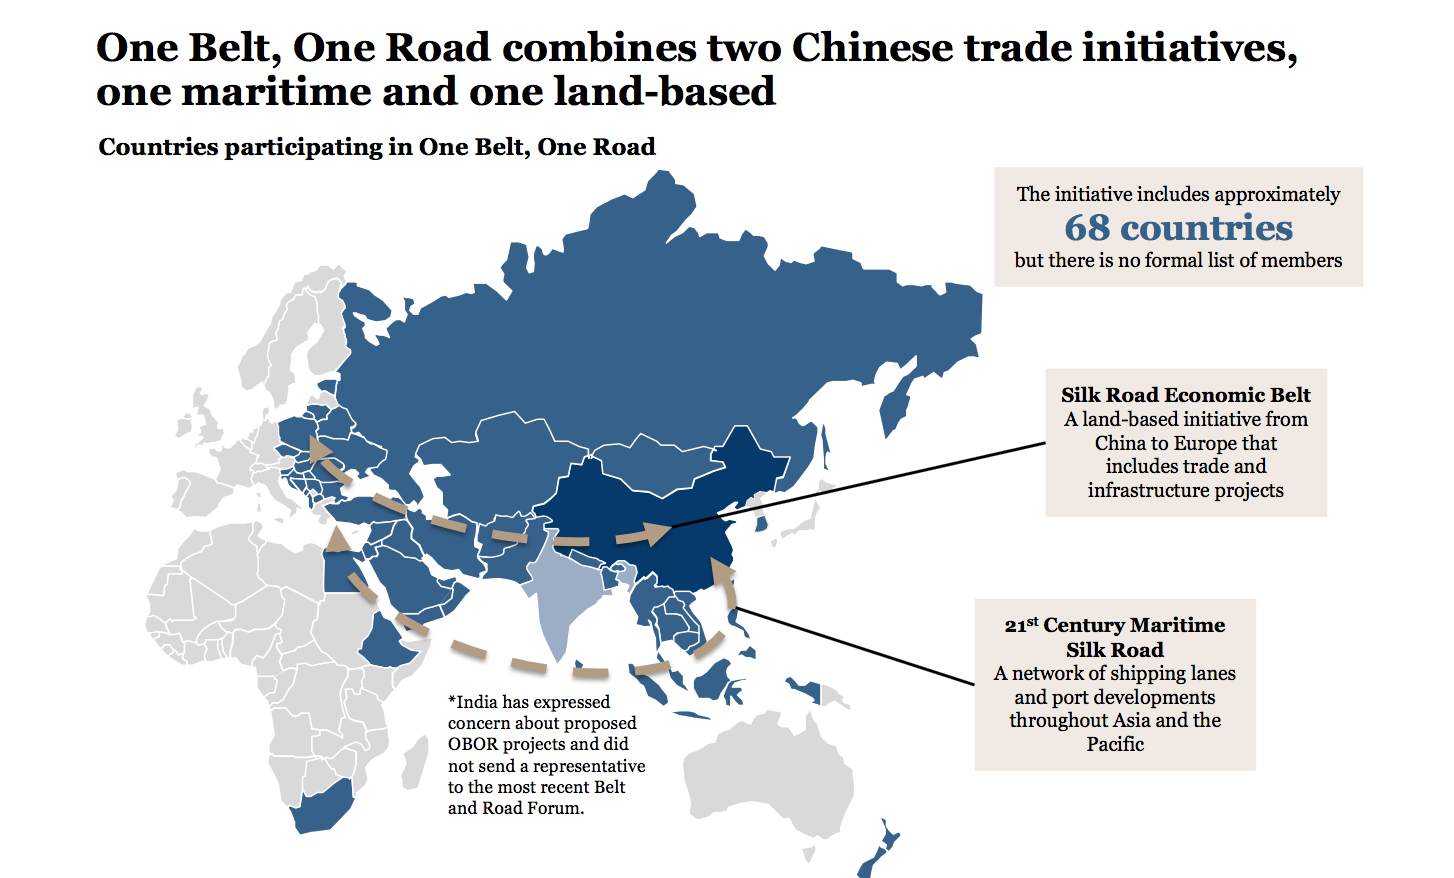 China’s One Belt, One Road initiative